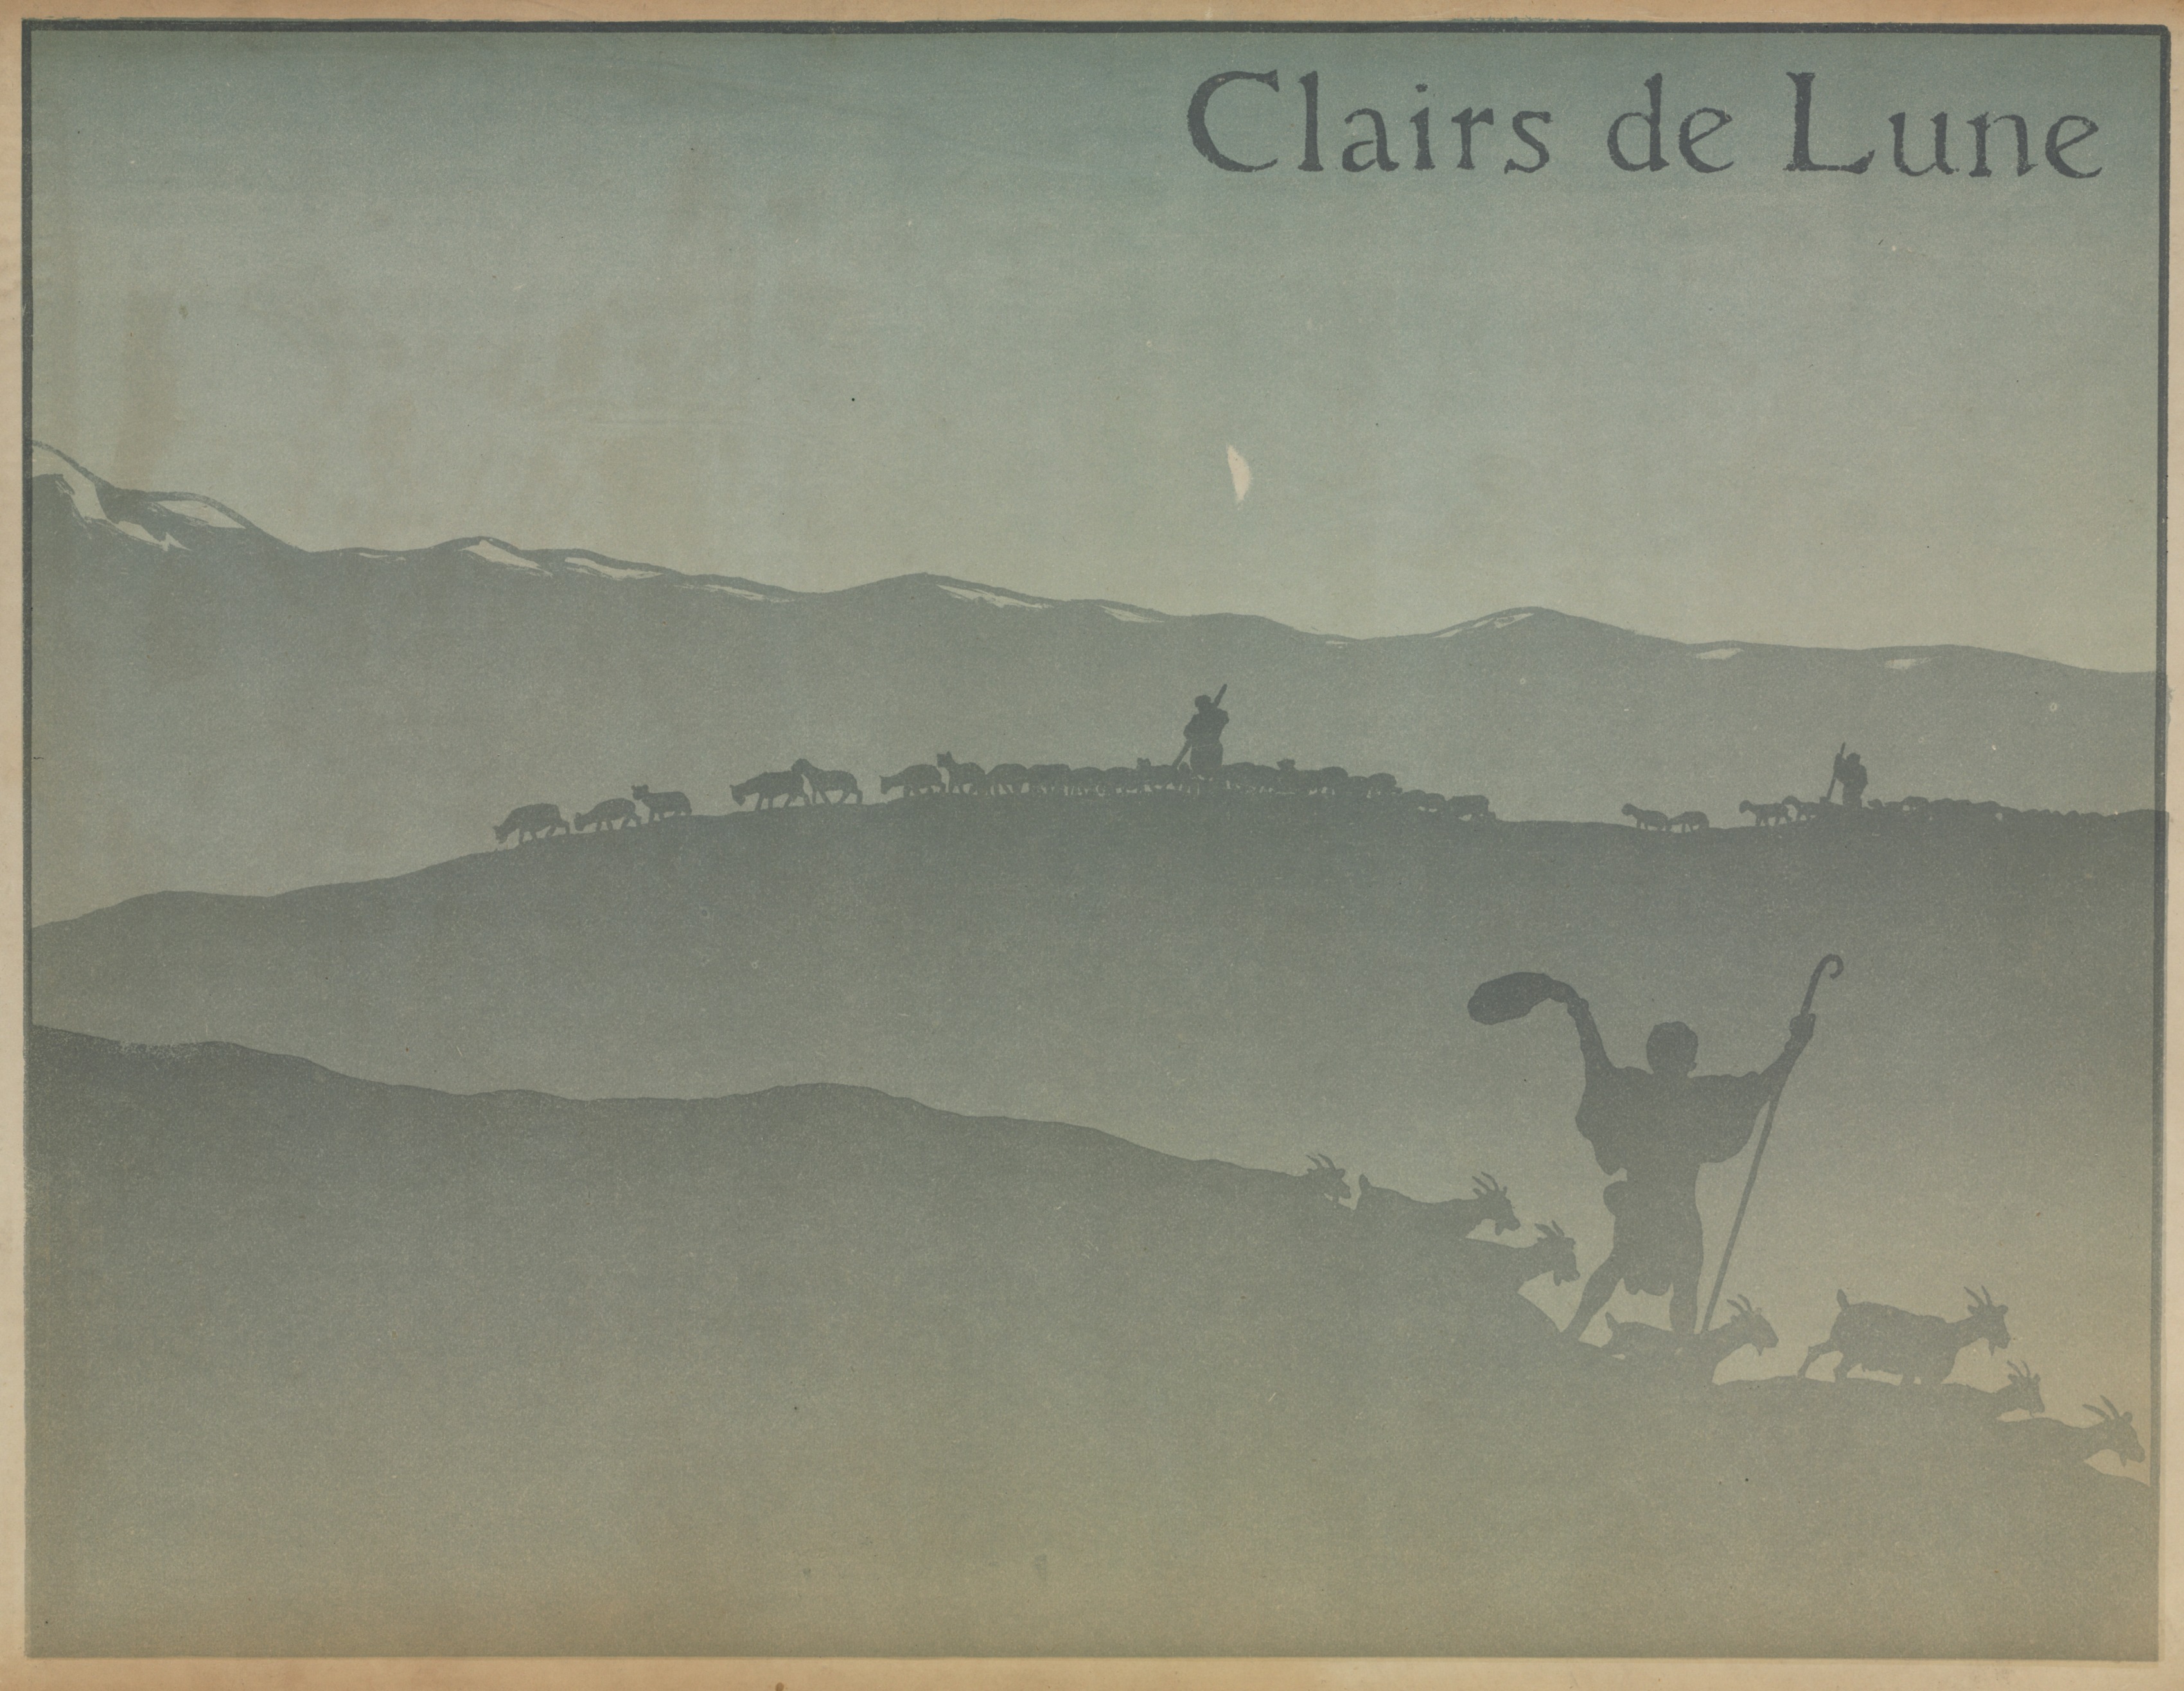 Clairs de Lune (Moonlight)